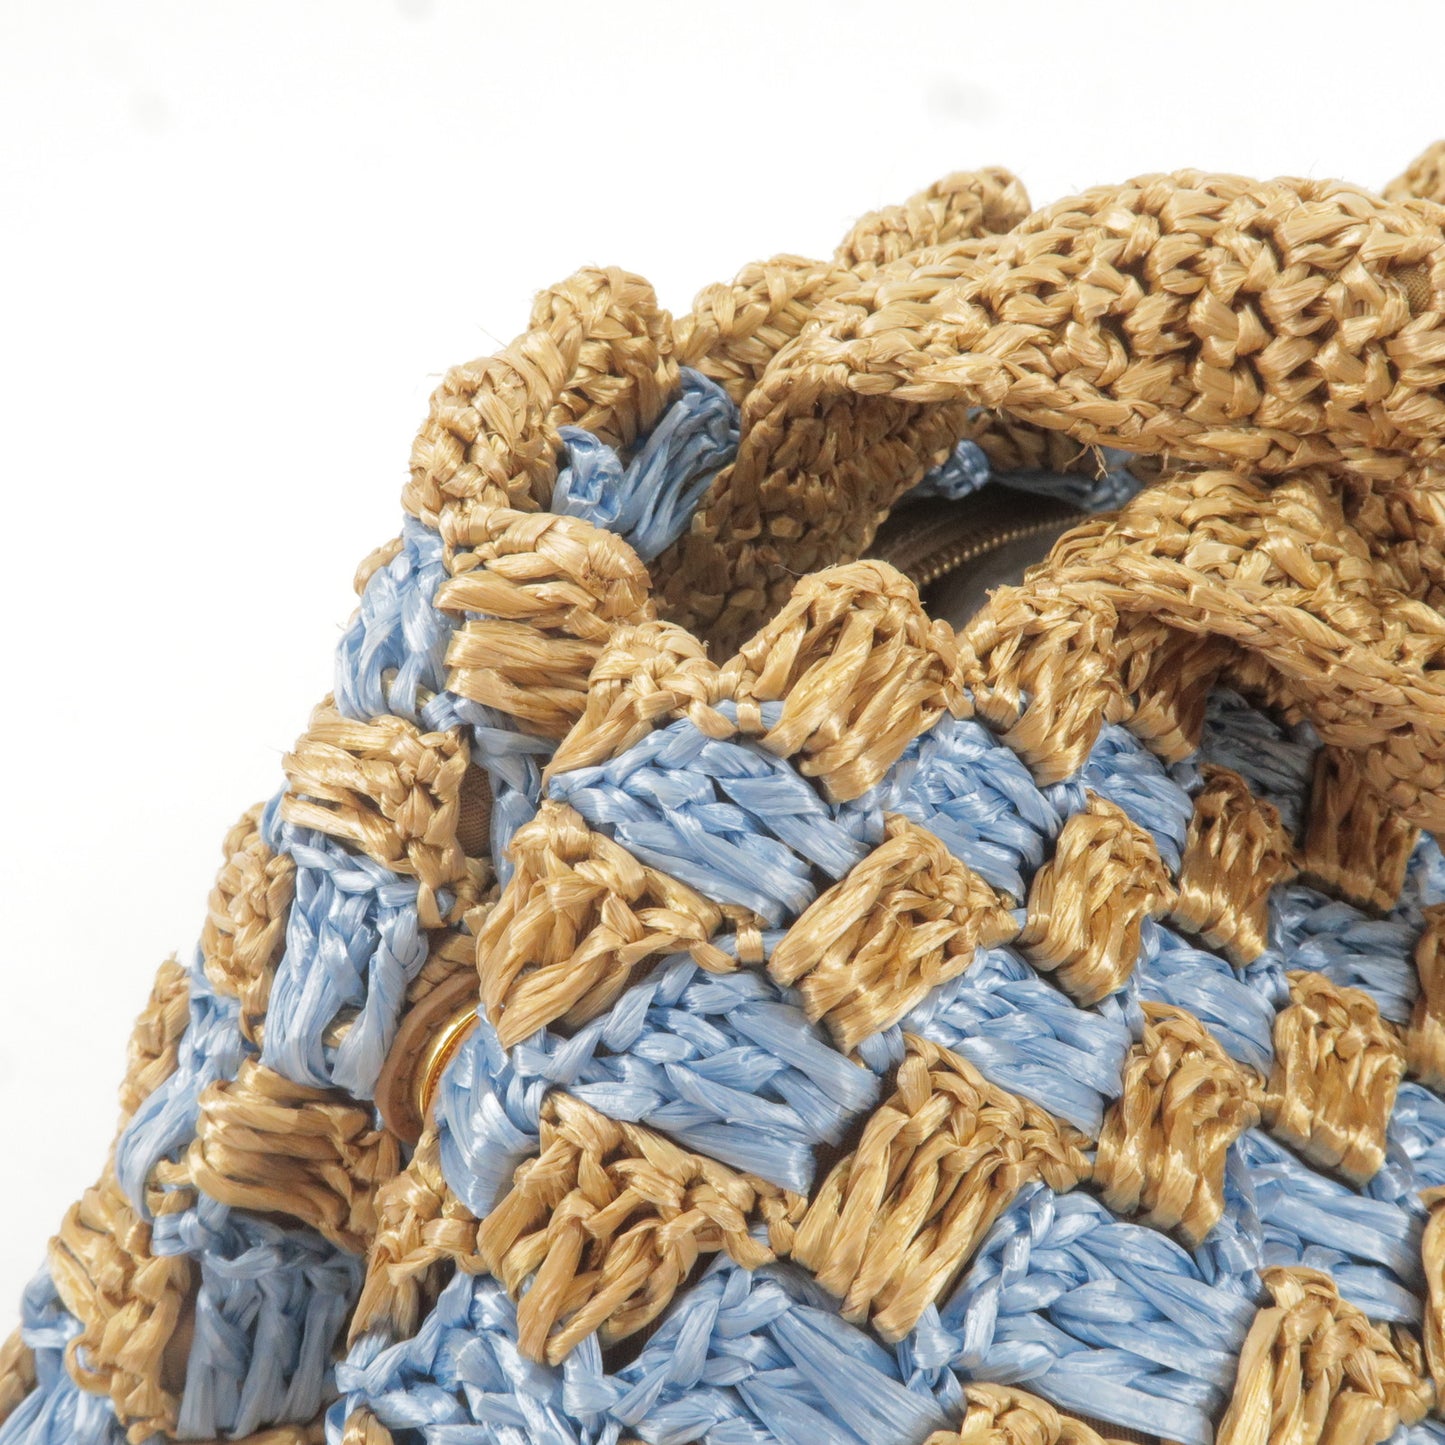 PRADA Raffia Crochet Canapa Tote Bag Blue Beige BN2303